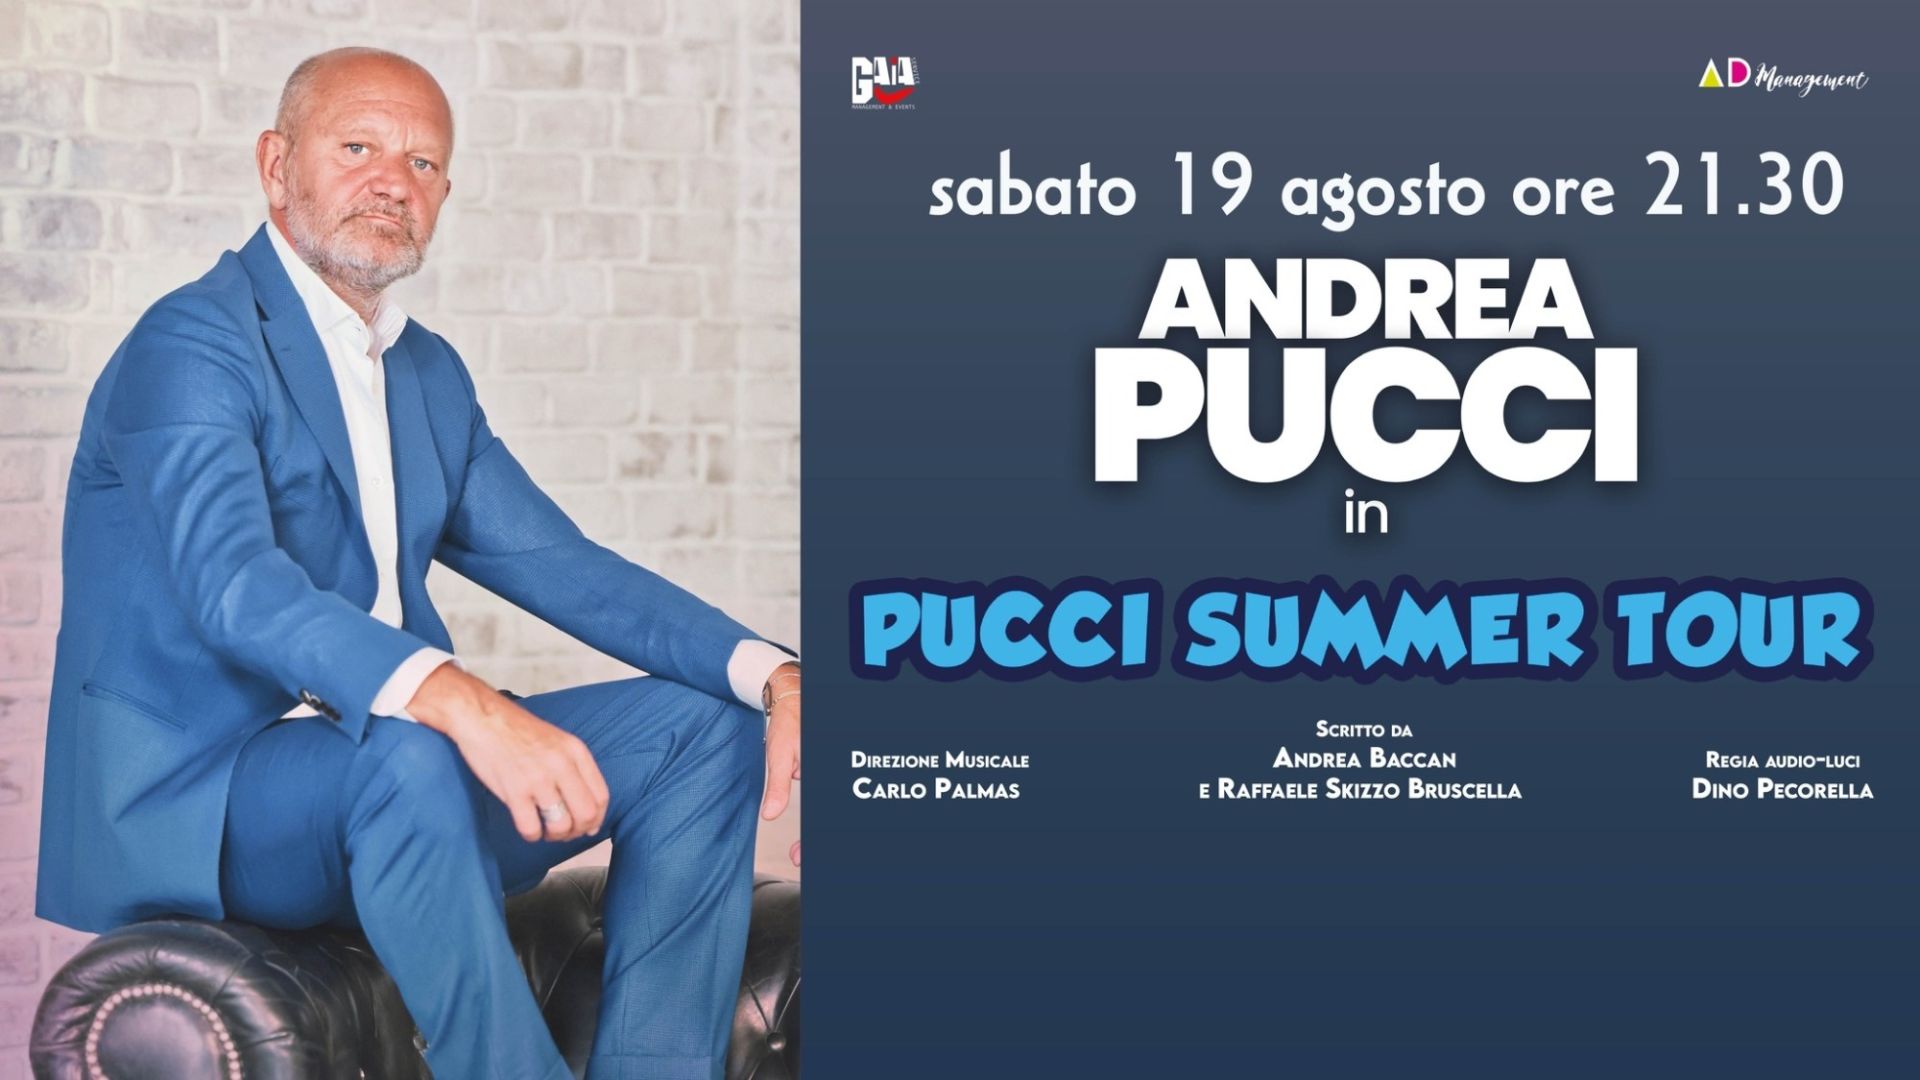 Andrea Pucci - "Pucci summer tour"